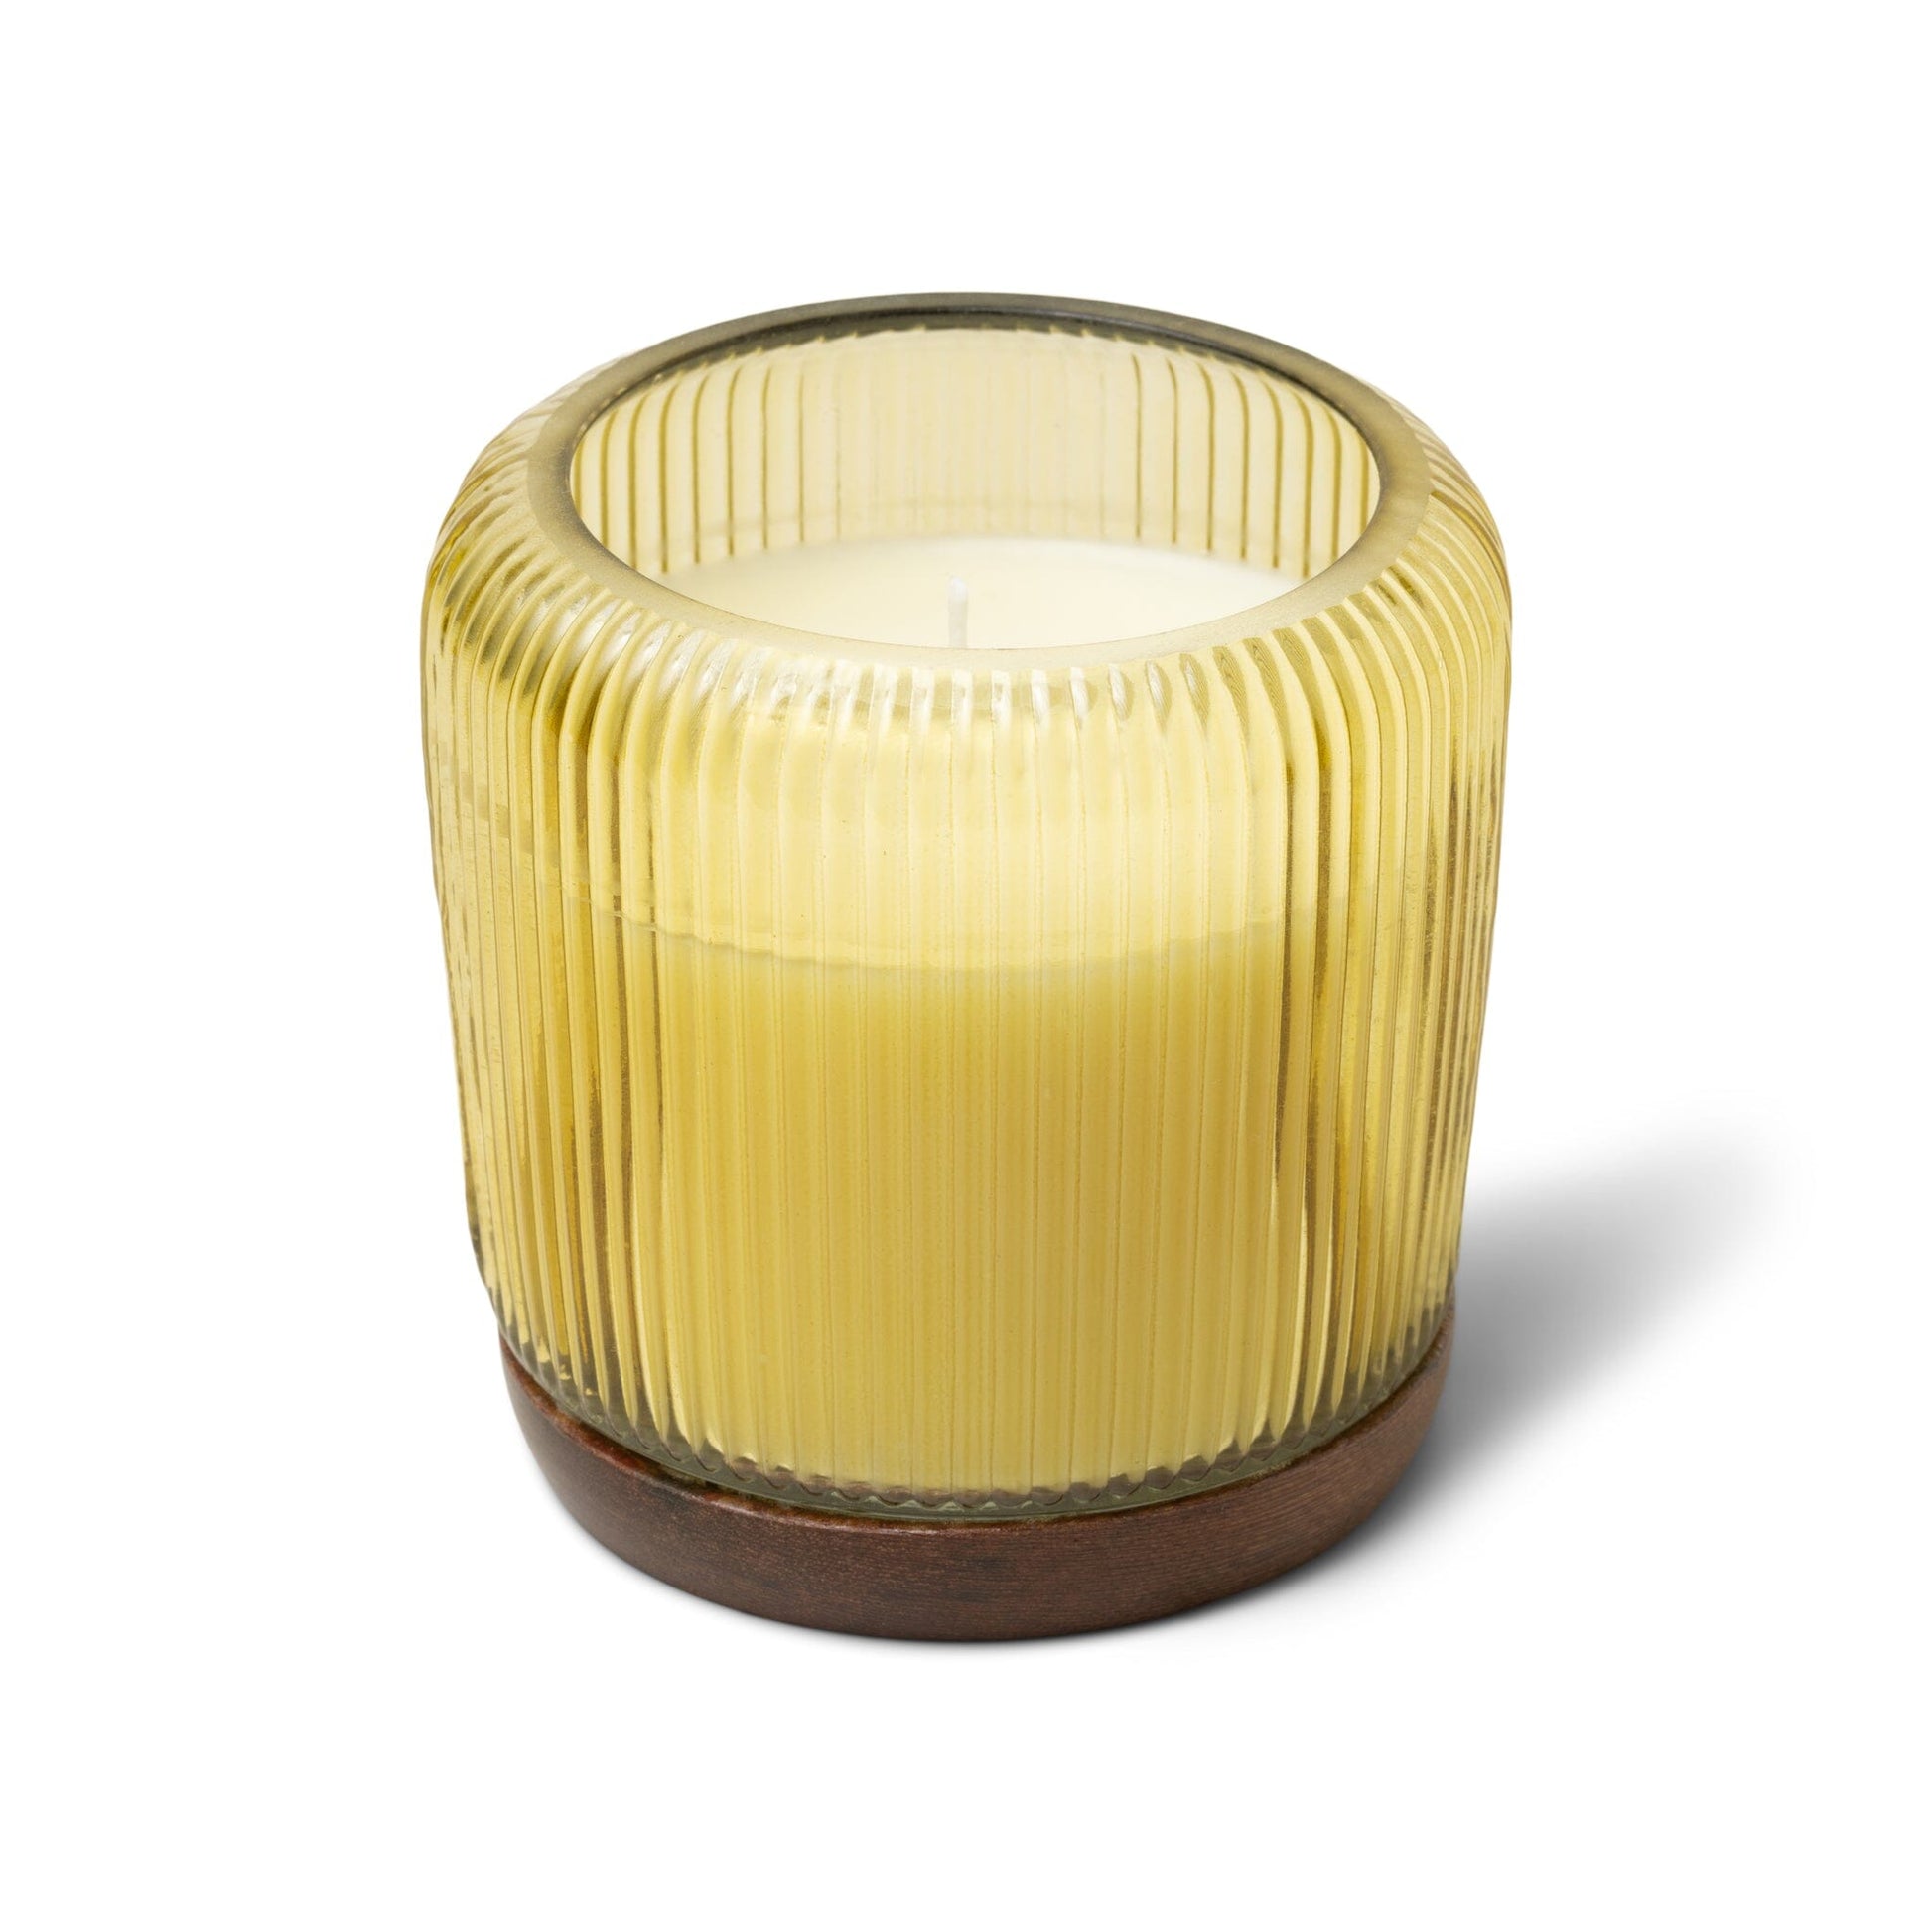 Gem 10 oz Candle - Honeysuckle & Moss ribbed glass